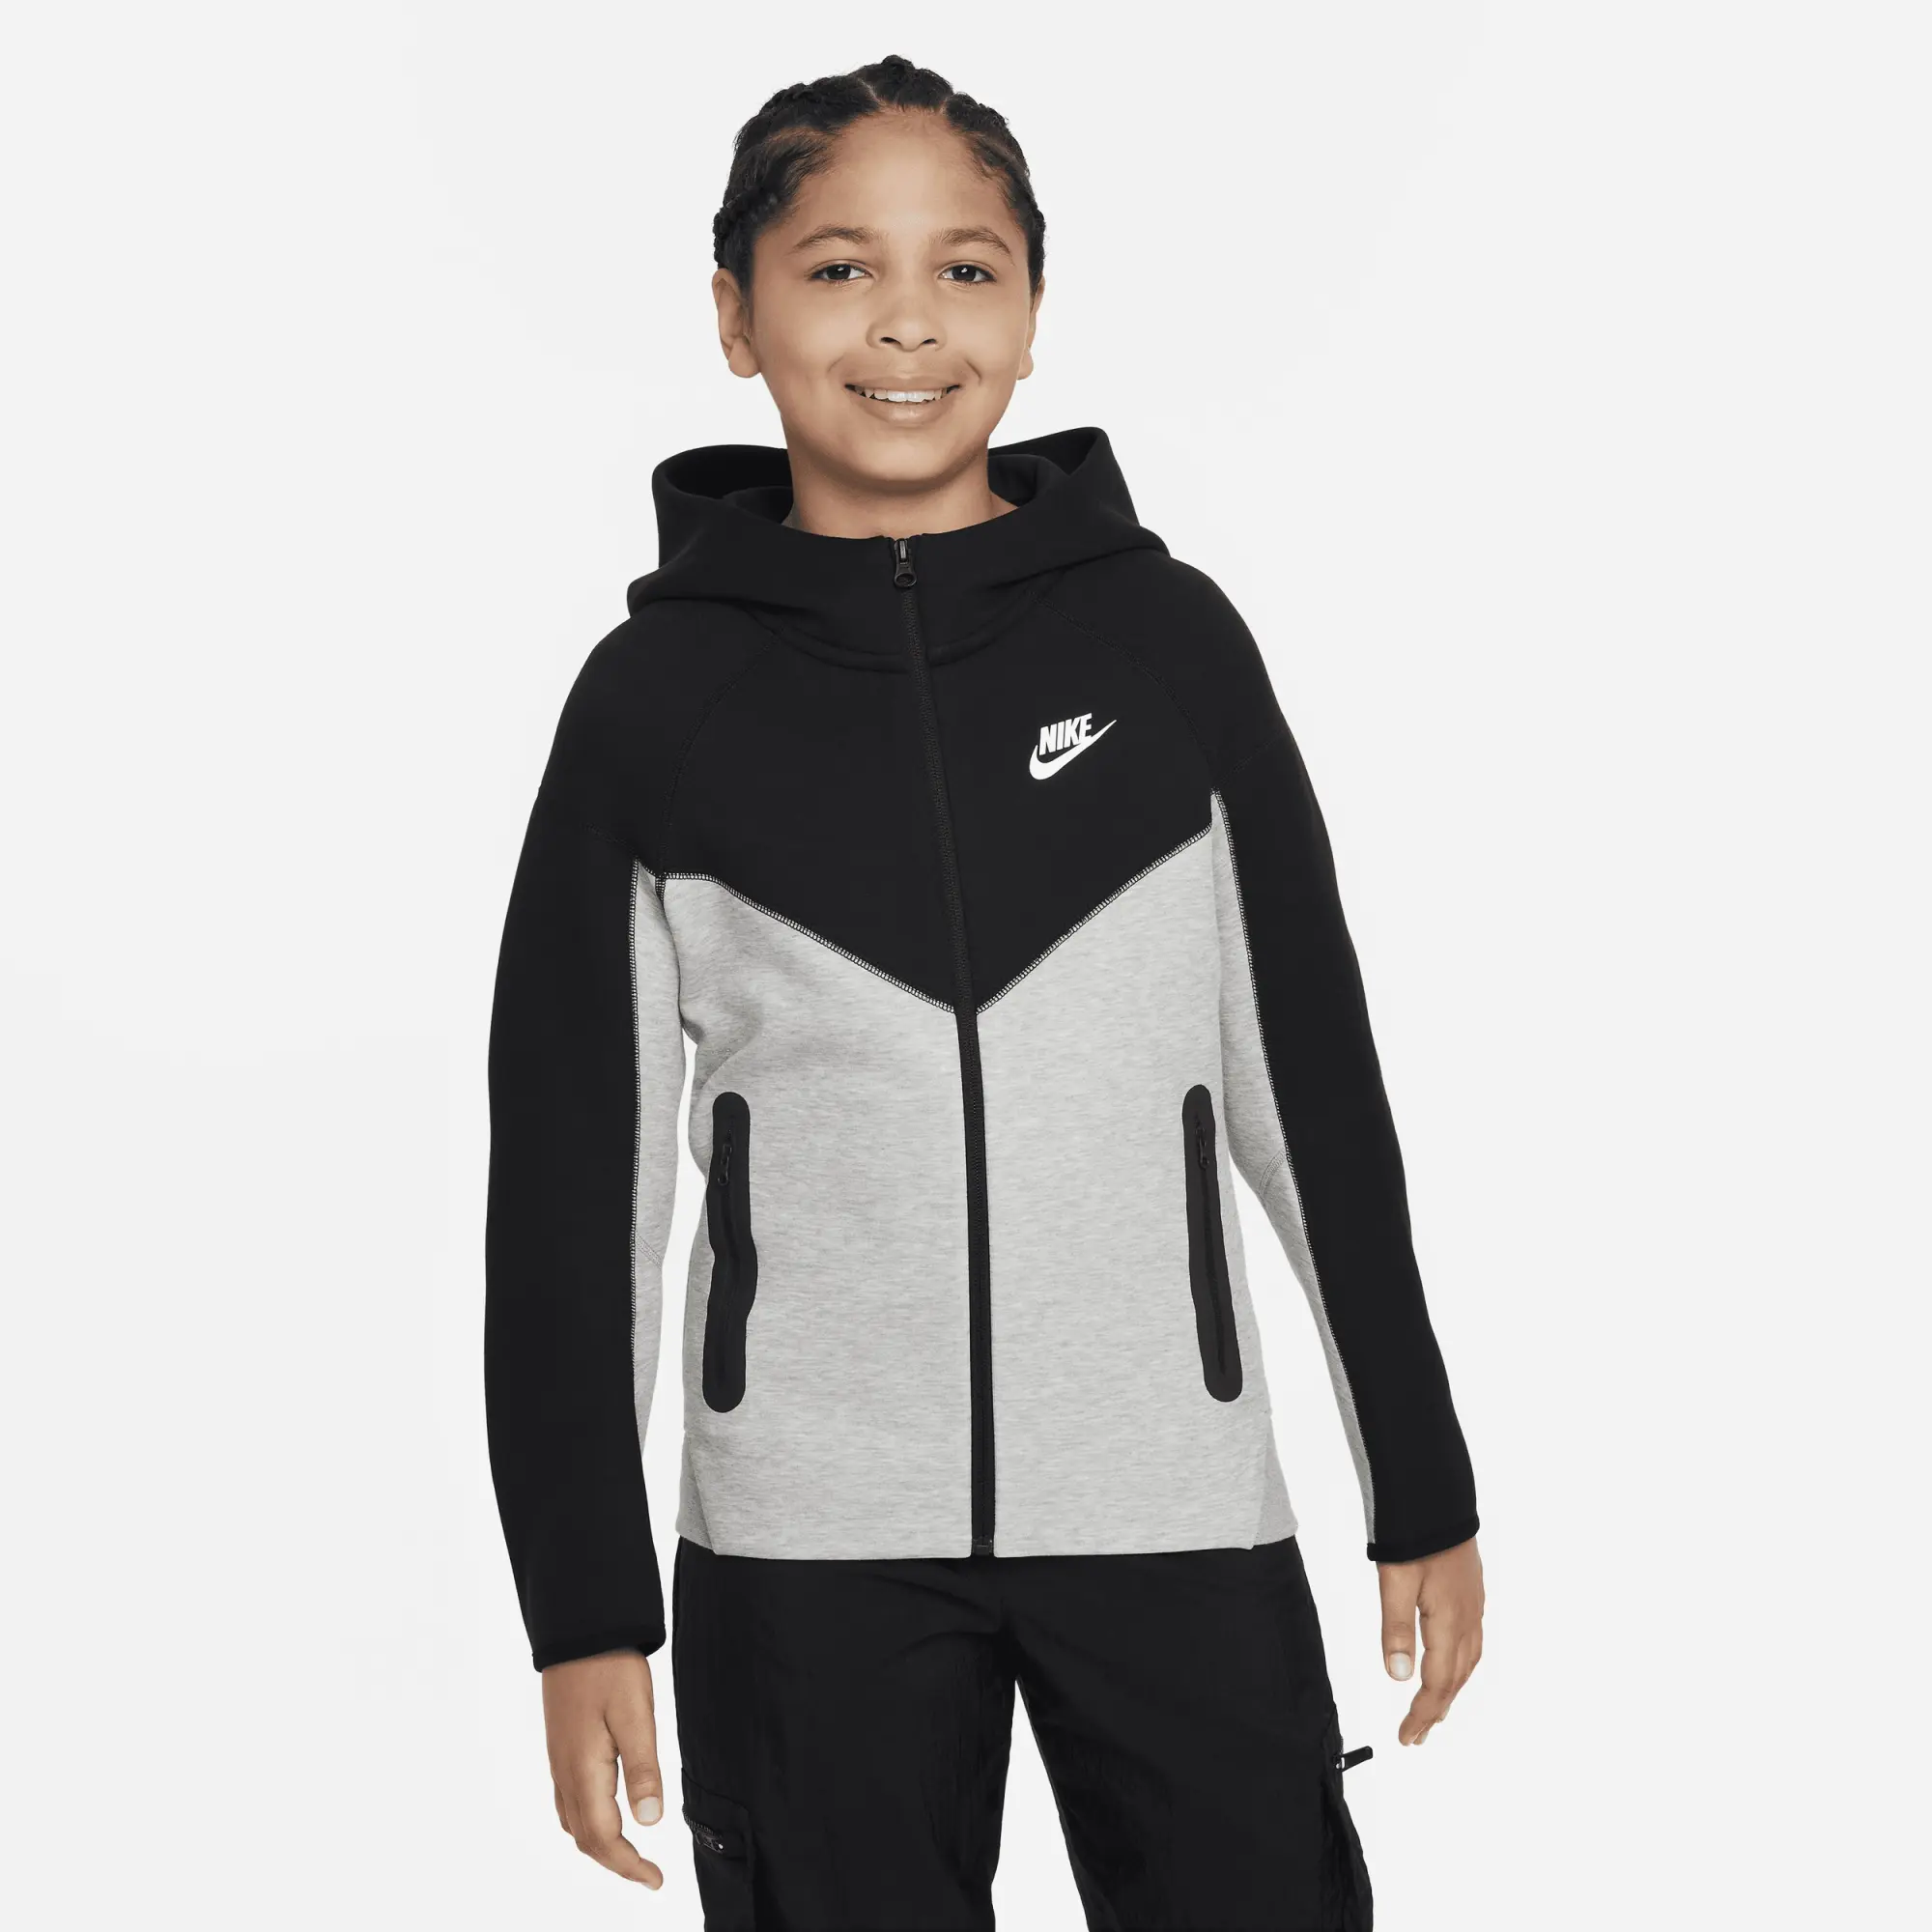 Nike Tech Fleece - Grey